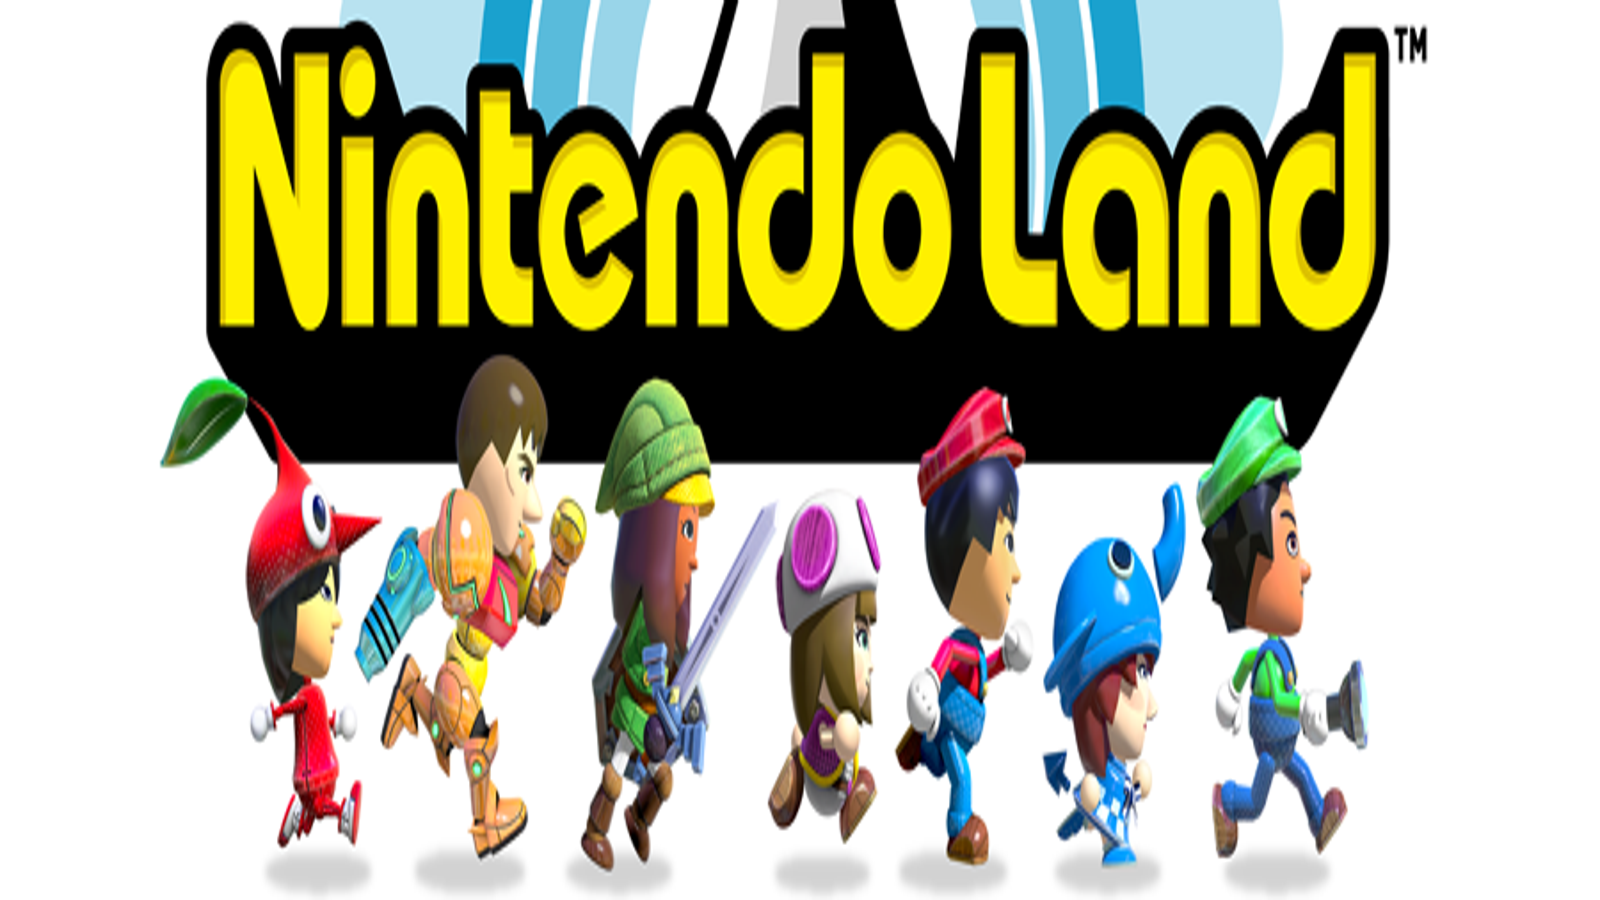 Review: Nintendo Land (Wii U) – Digitally Downloaded